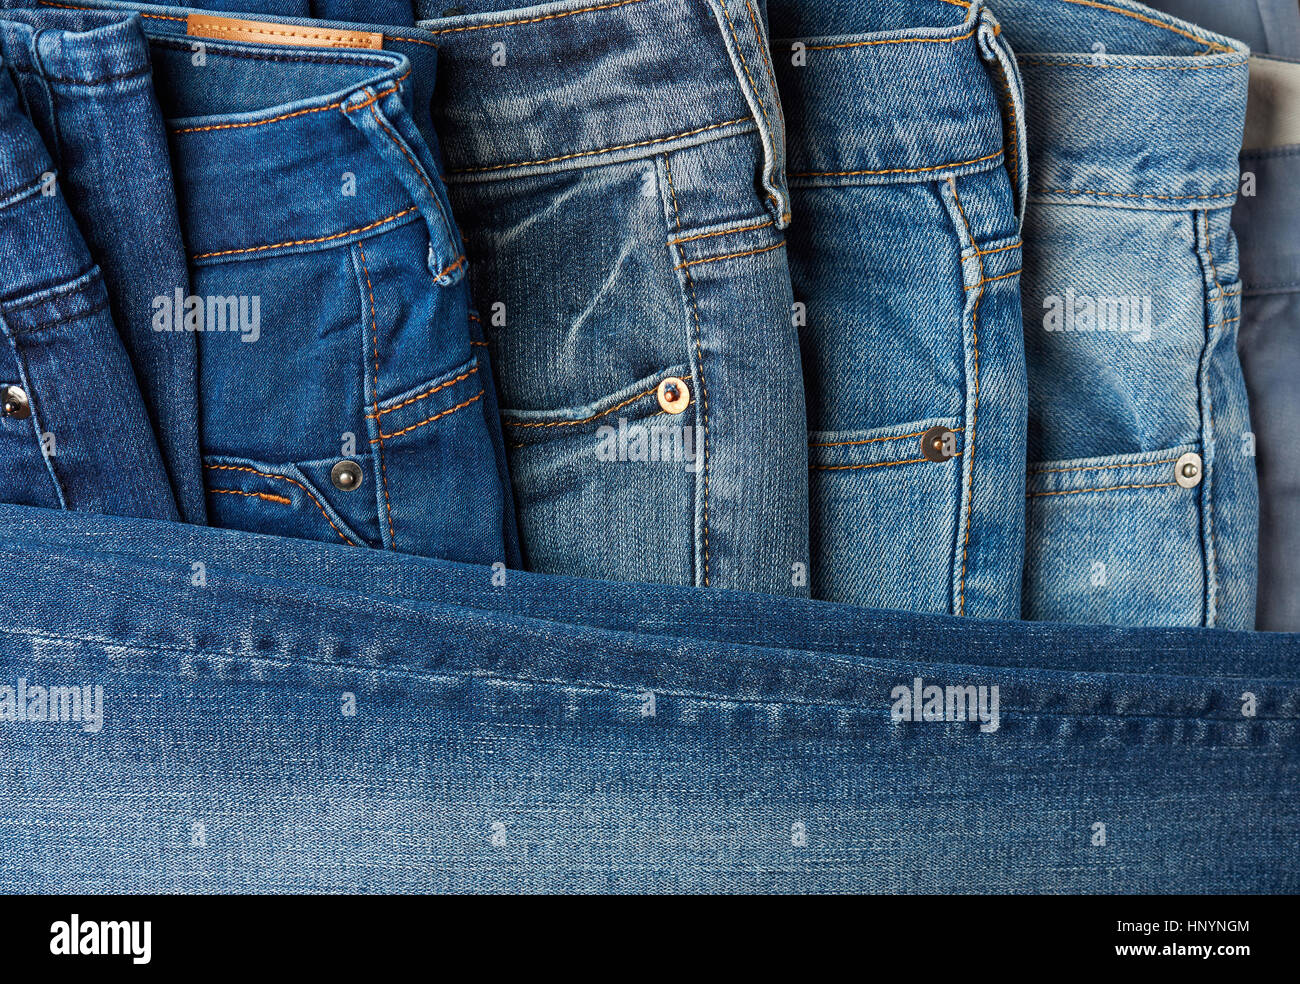 Blue jeans pants clothes pile background. Stack of blue jeans on shop desk Stock Photo